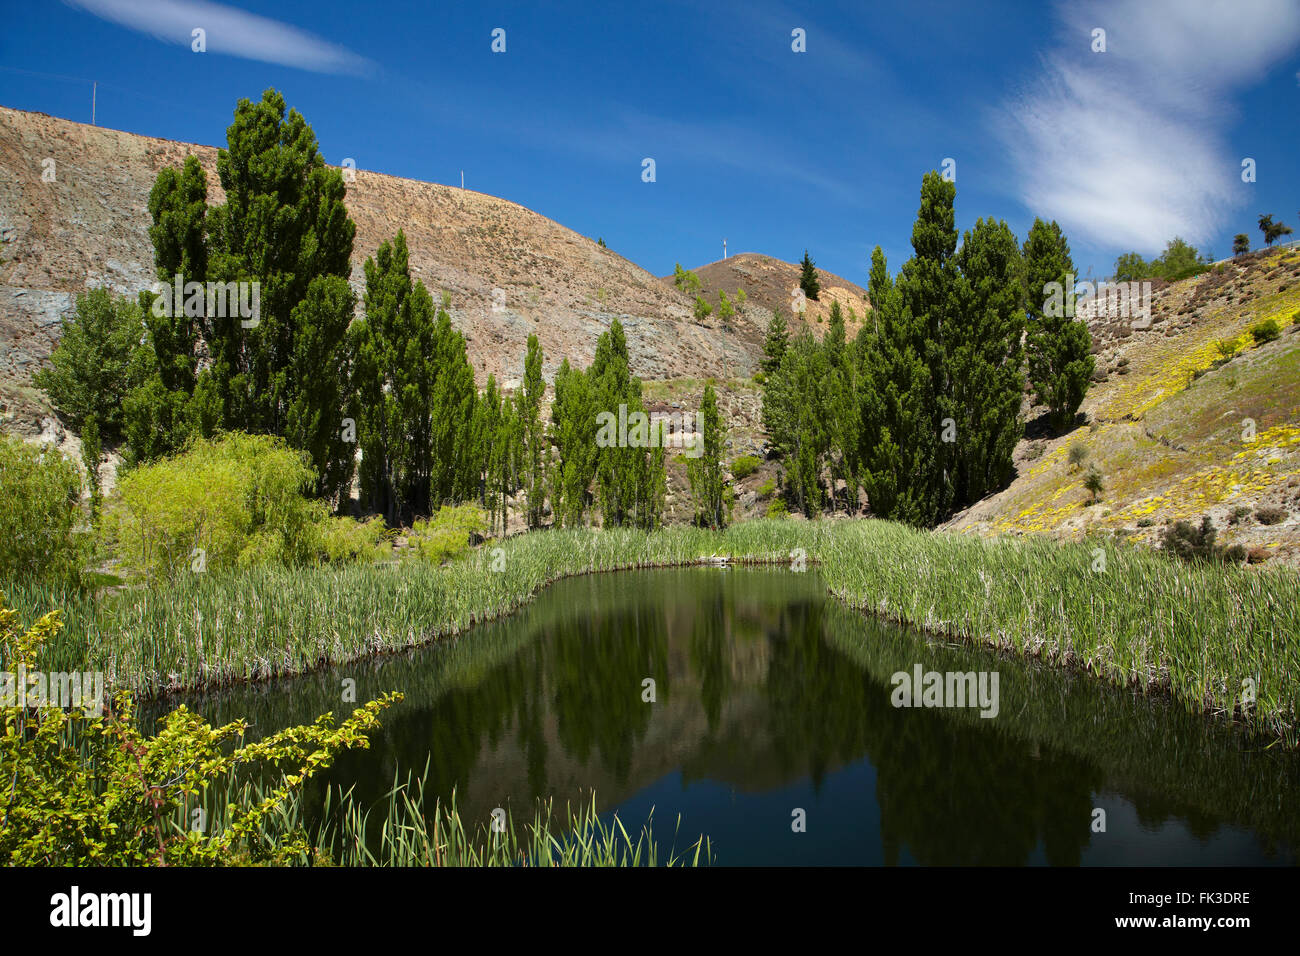 Pond, reeds and poplar trees, Bannockburn, Central Otago, South Island, New Zealand Stock Photo